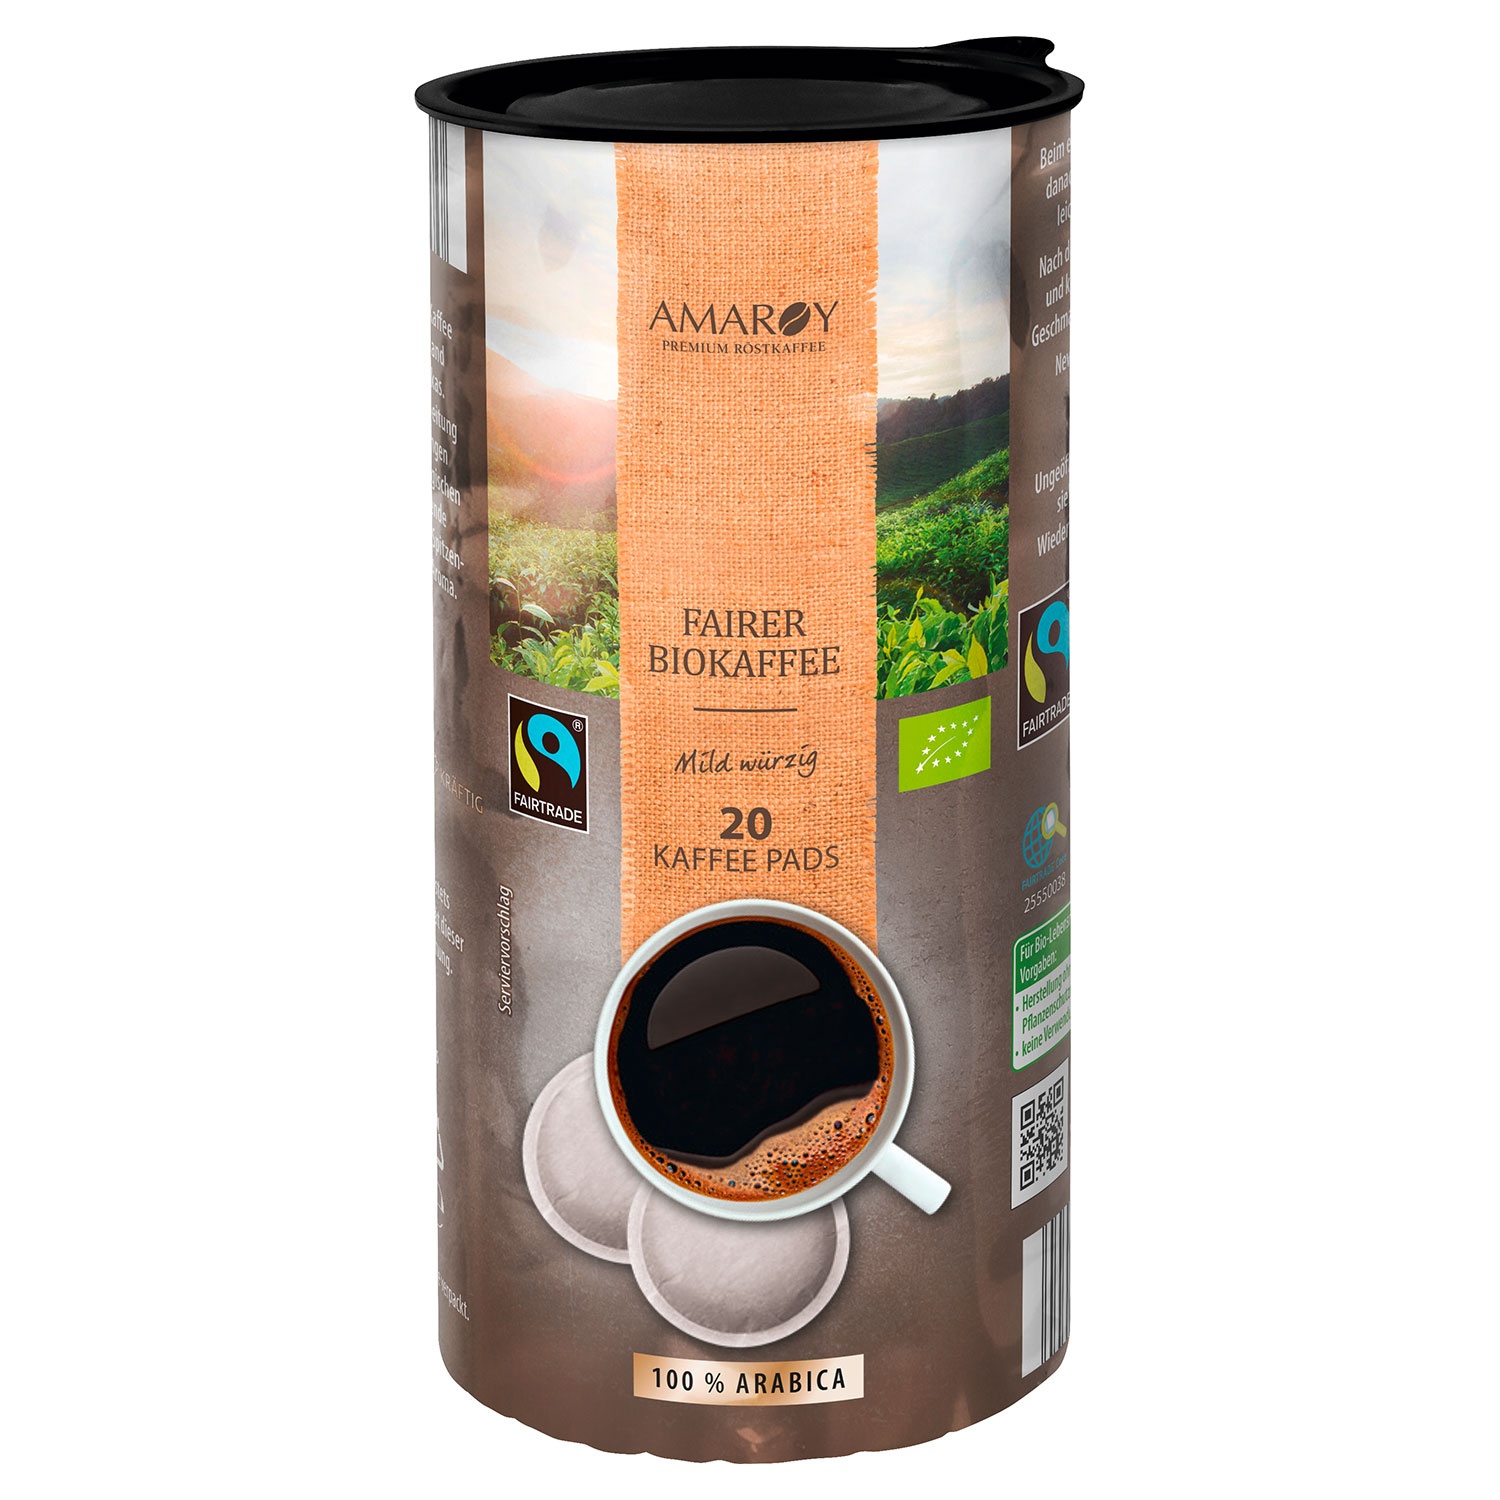 AMAROY Fairer Biokaffee 144 g